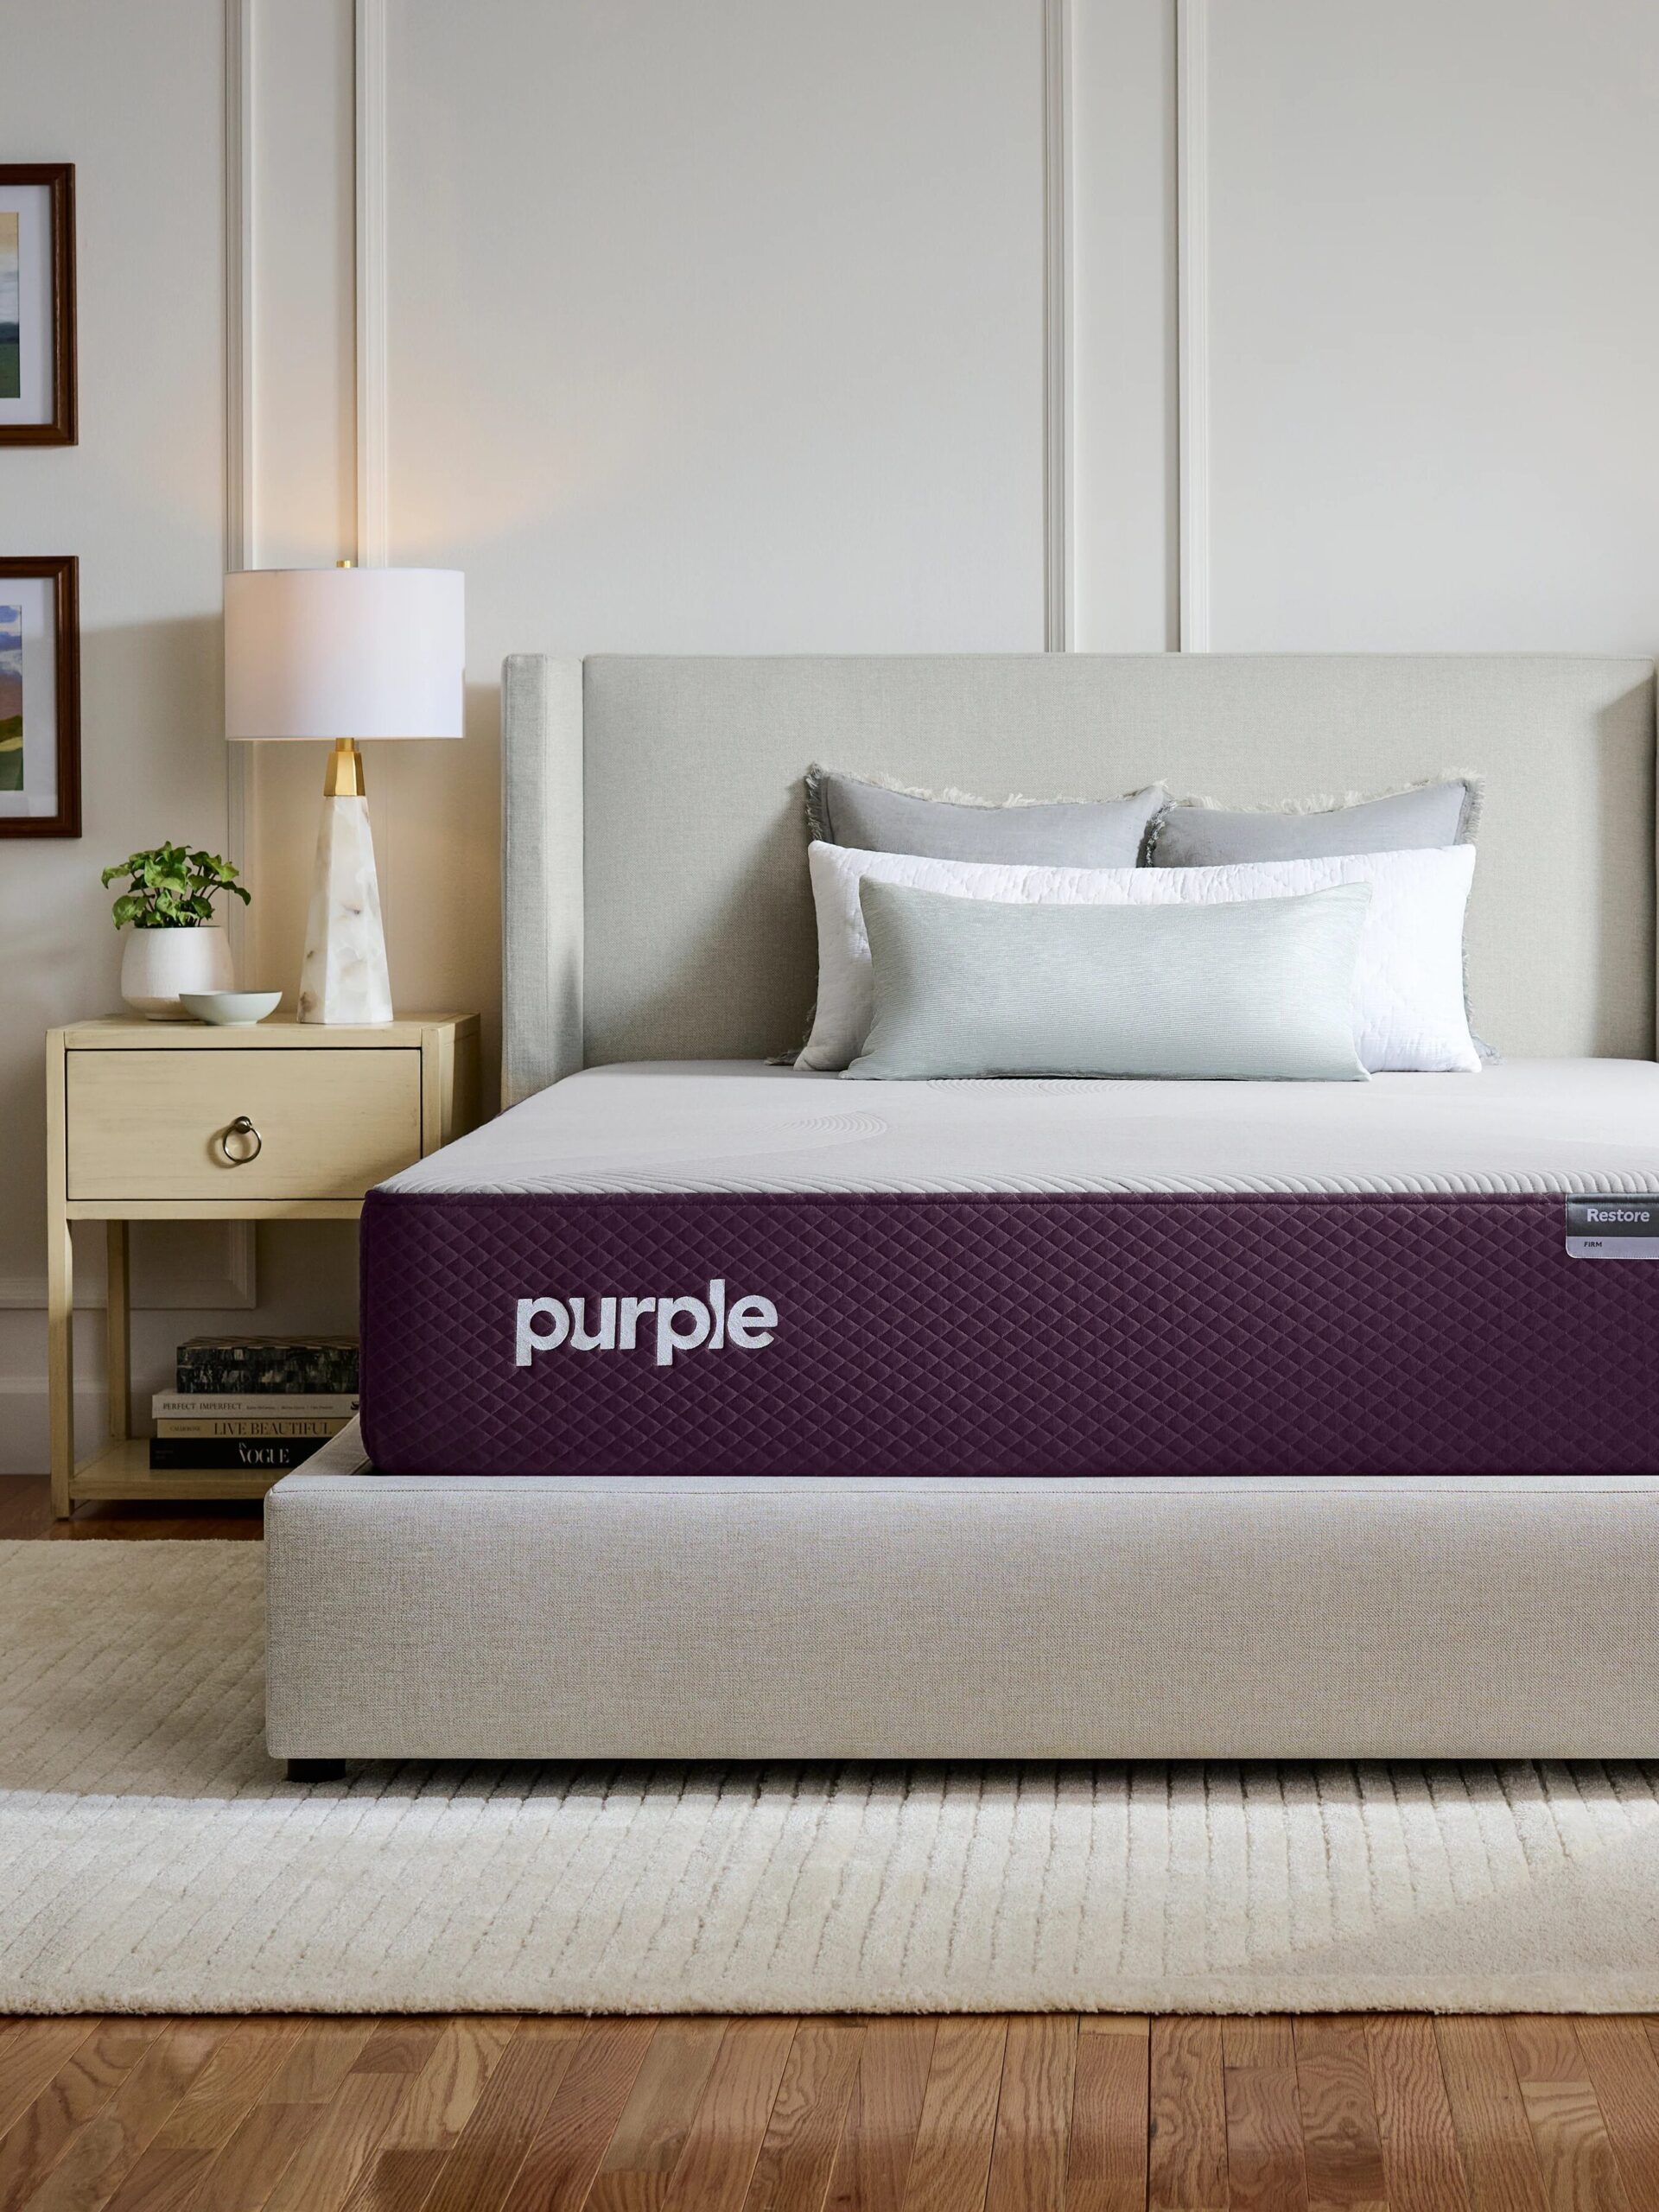 A purple mattress set on a bedframe in a bedroom. 